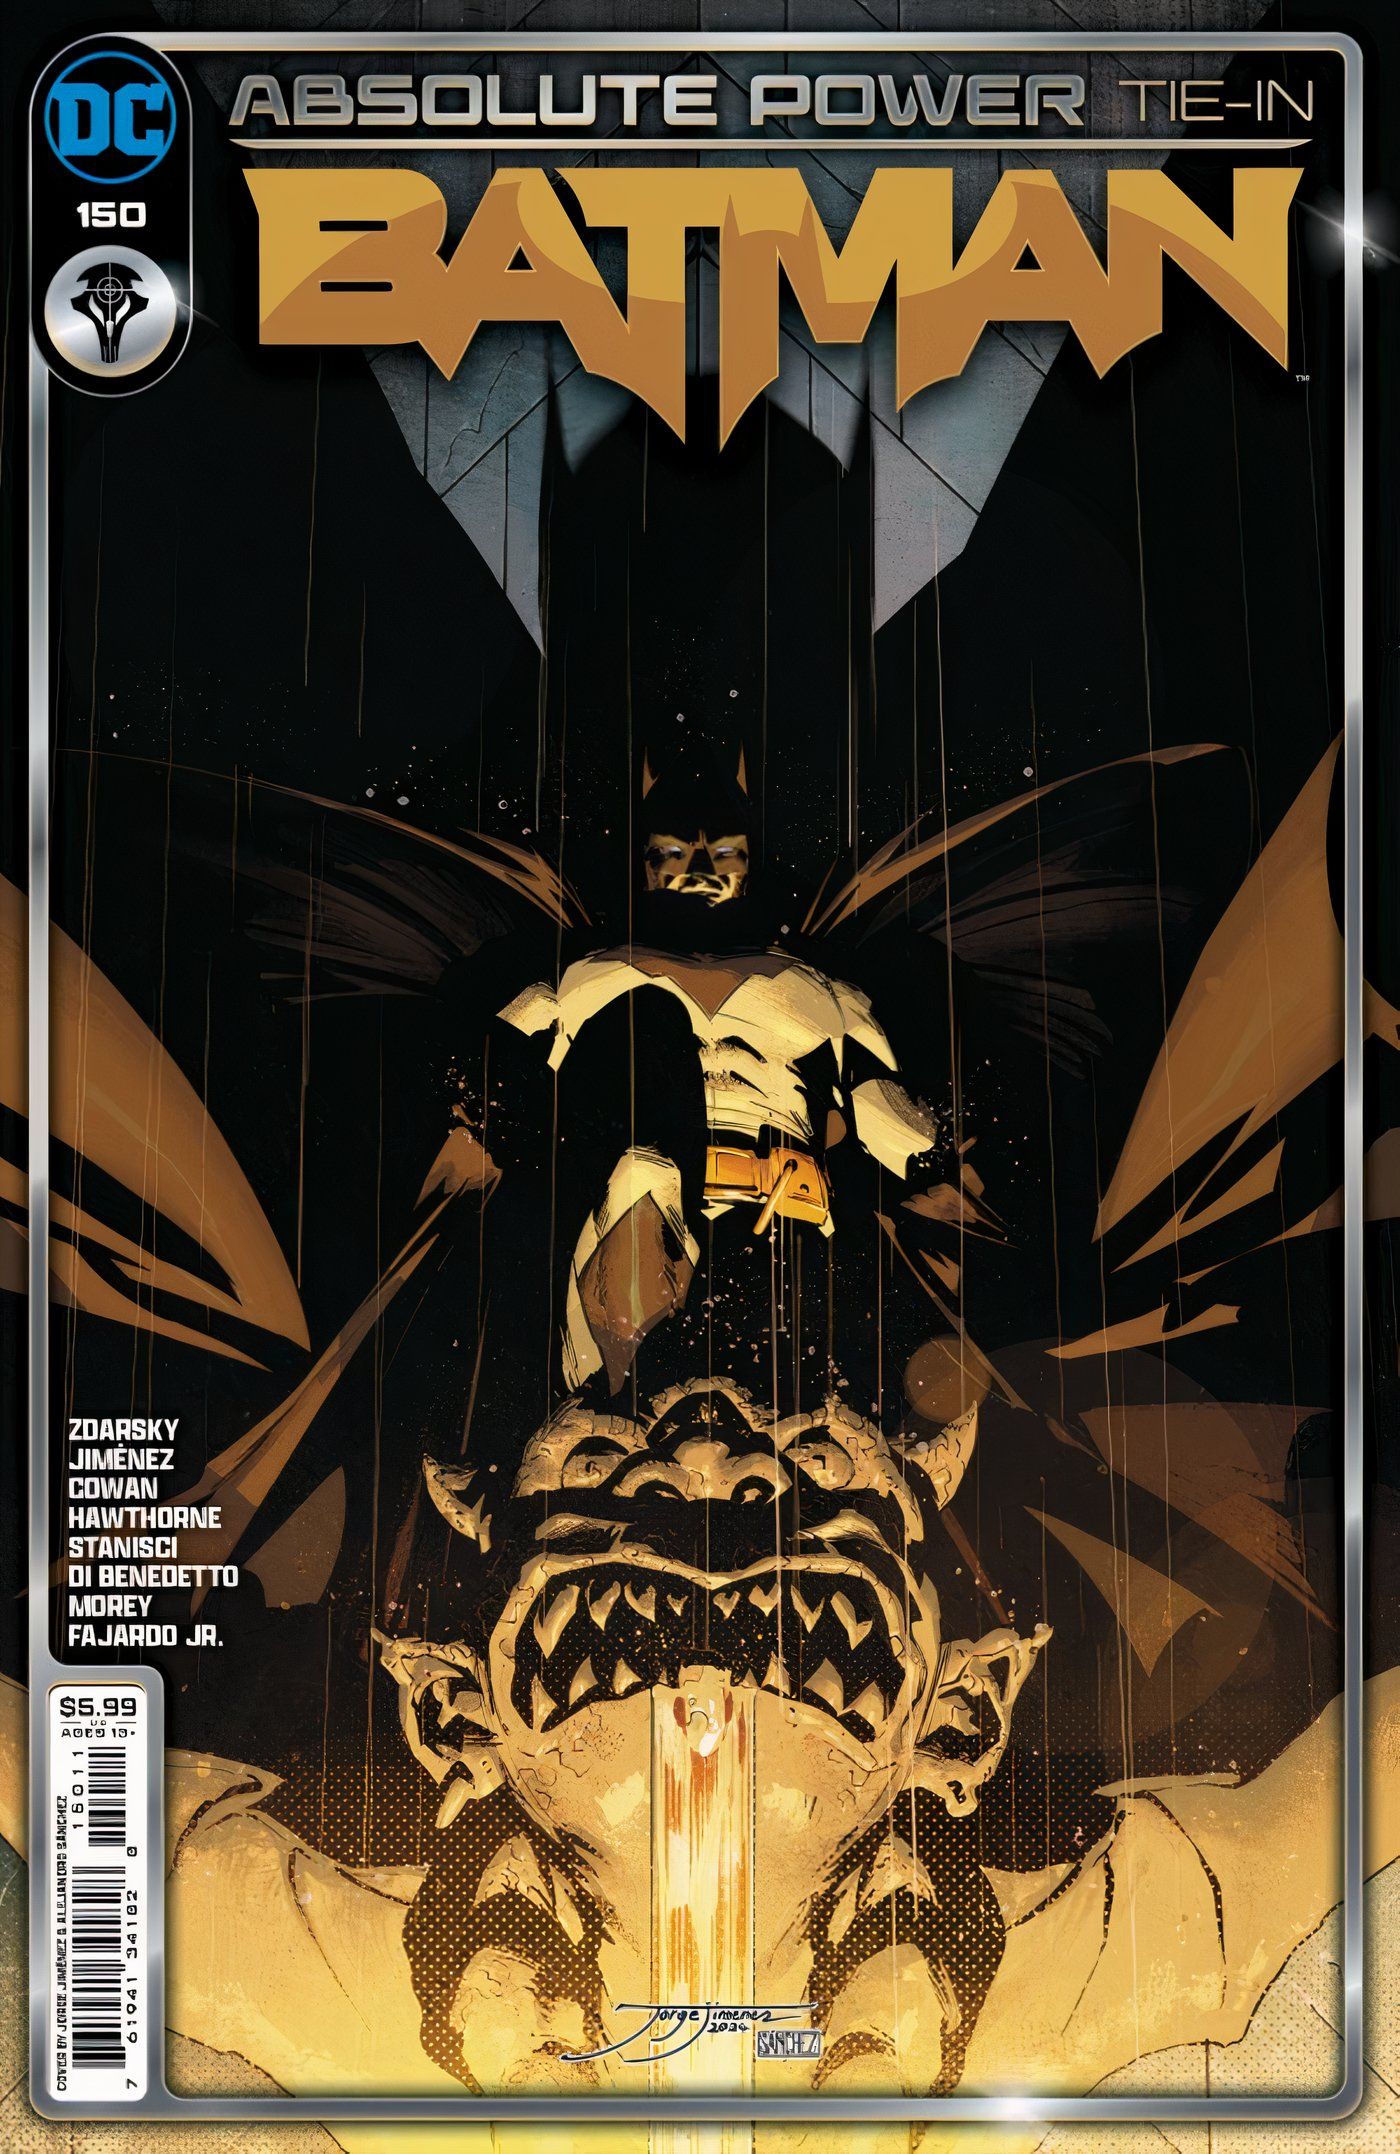 Capa principal do Batman #150